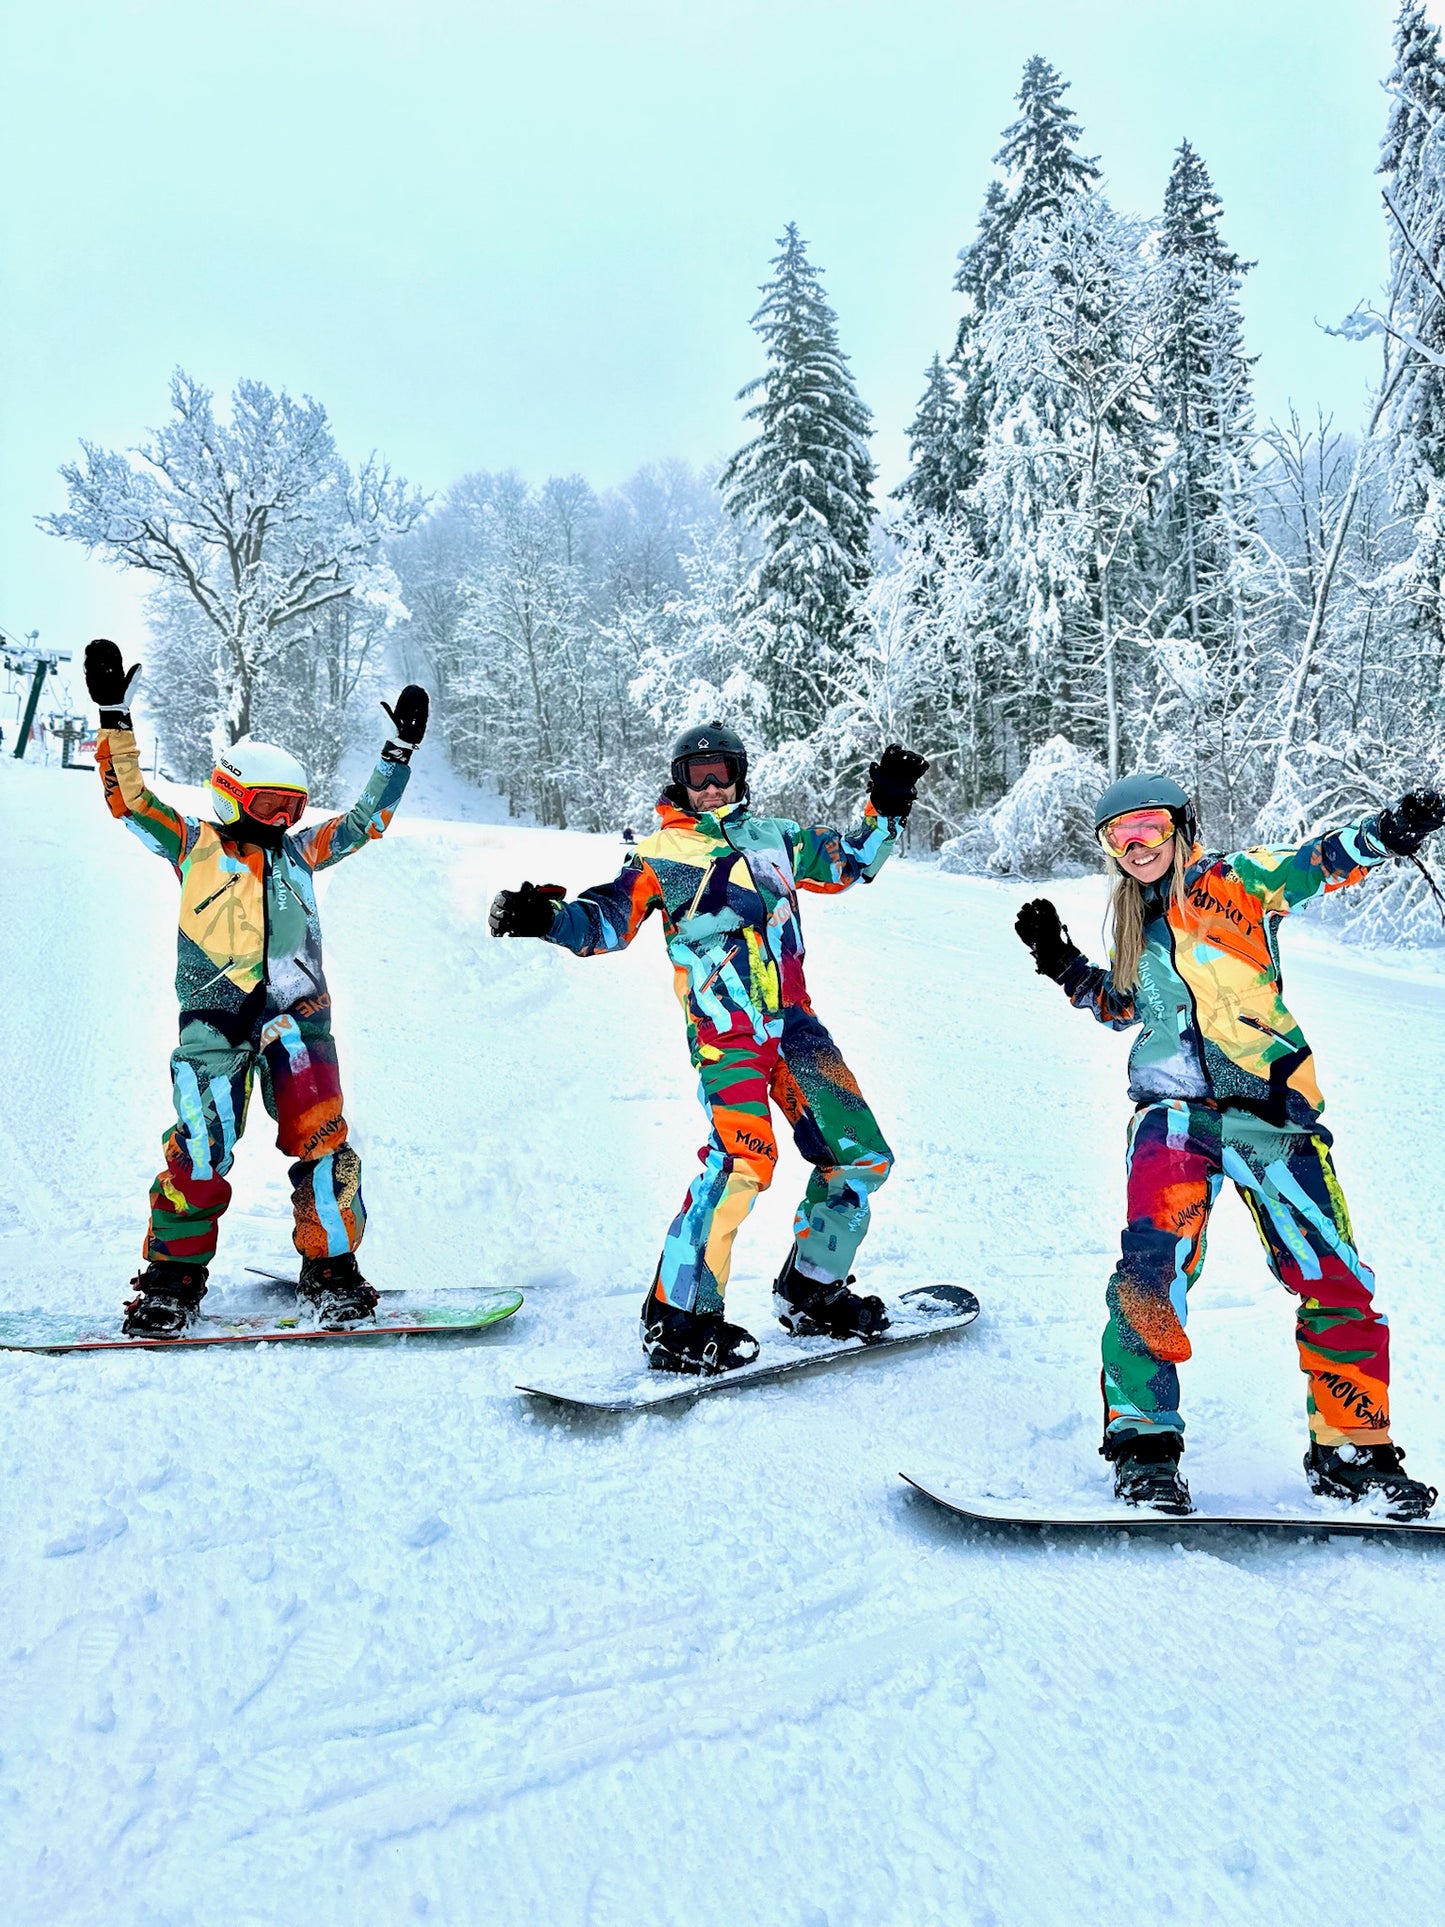 Boys/Girls winter ski / snowboard snowsuit with Orange colors